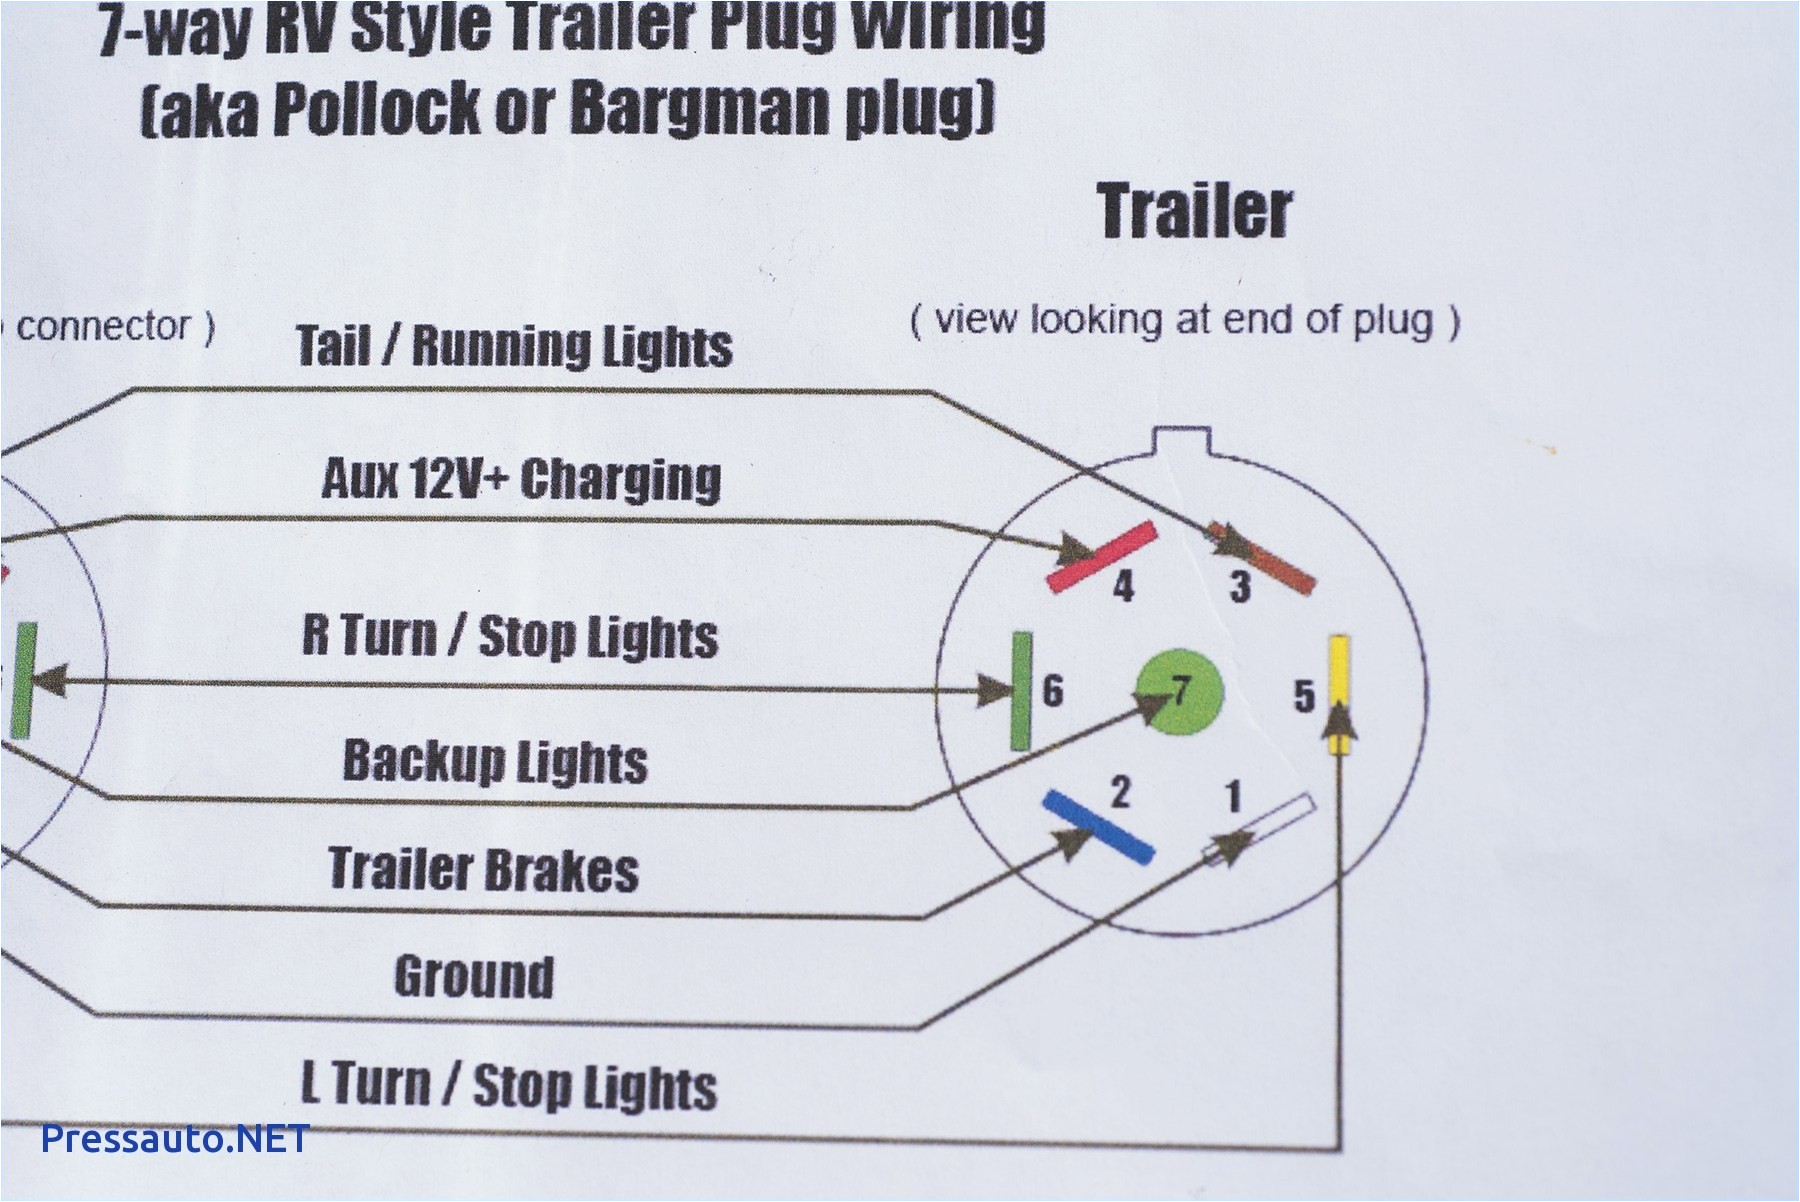 snow bear trailer wiring diagram tail light wiring diagram expert snow bear trailer wiring diagram tail light